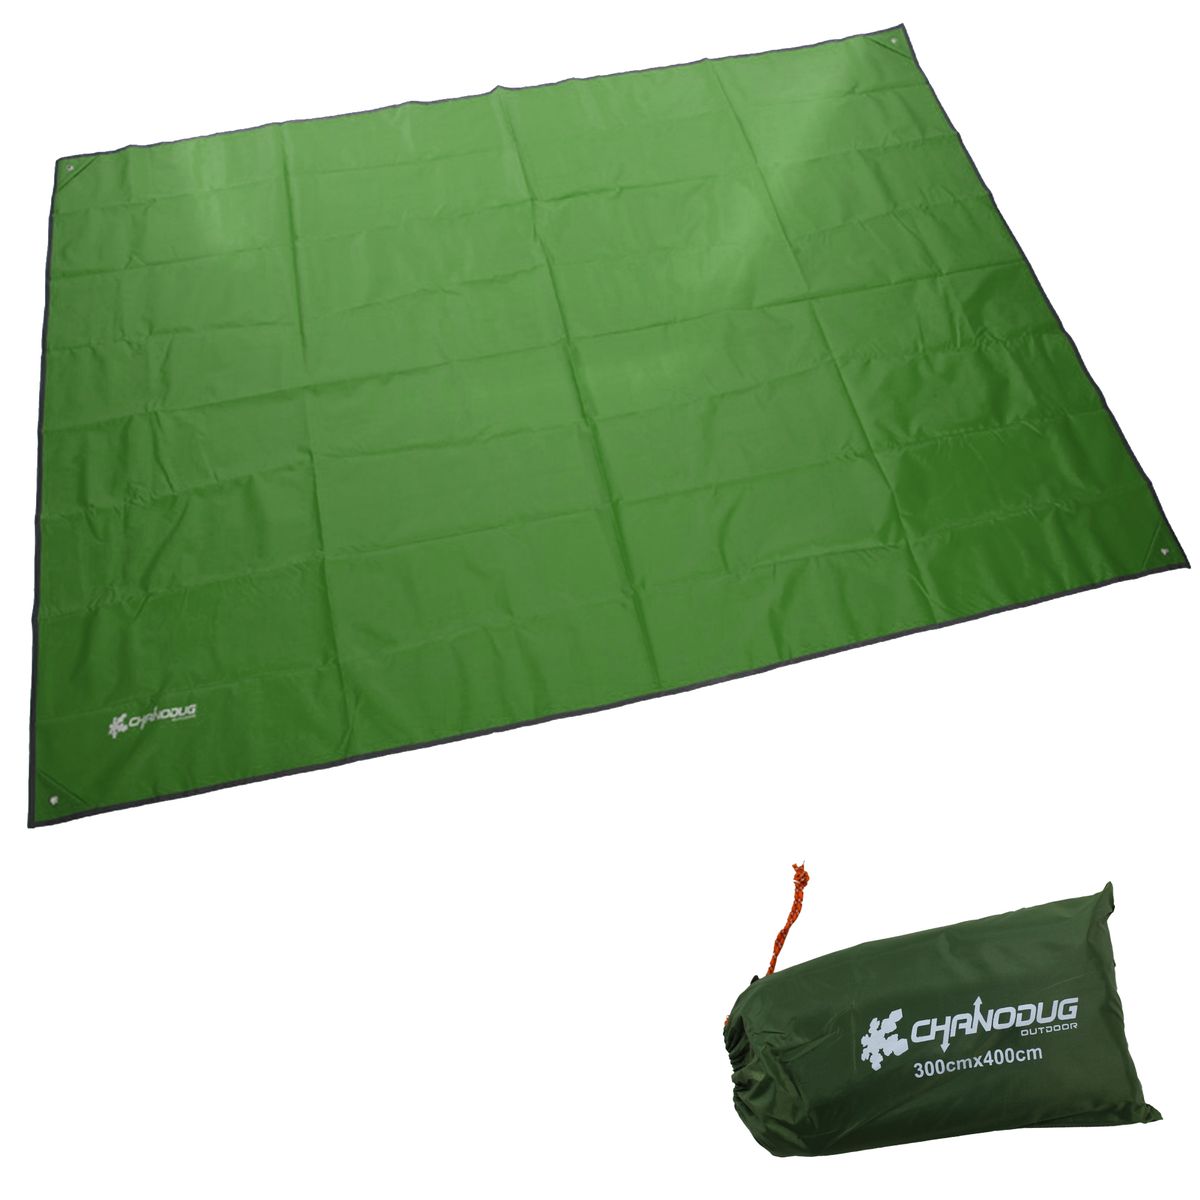 Chanodug 3x4M Waterproof Shade Floor & Rain Cover Tarp / Canopy FX8904-6